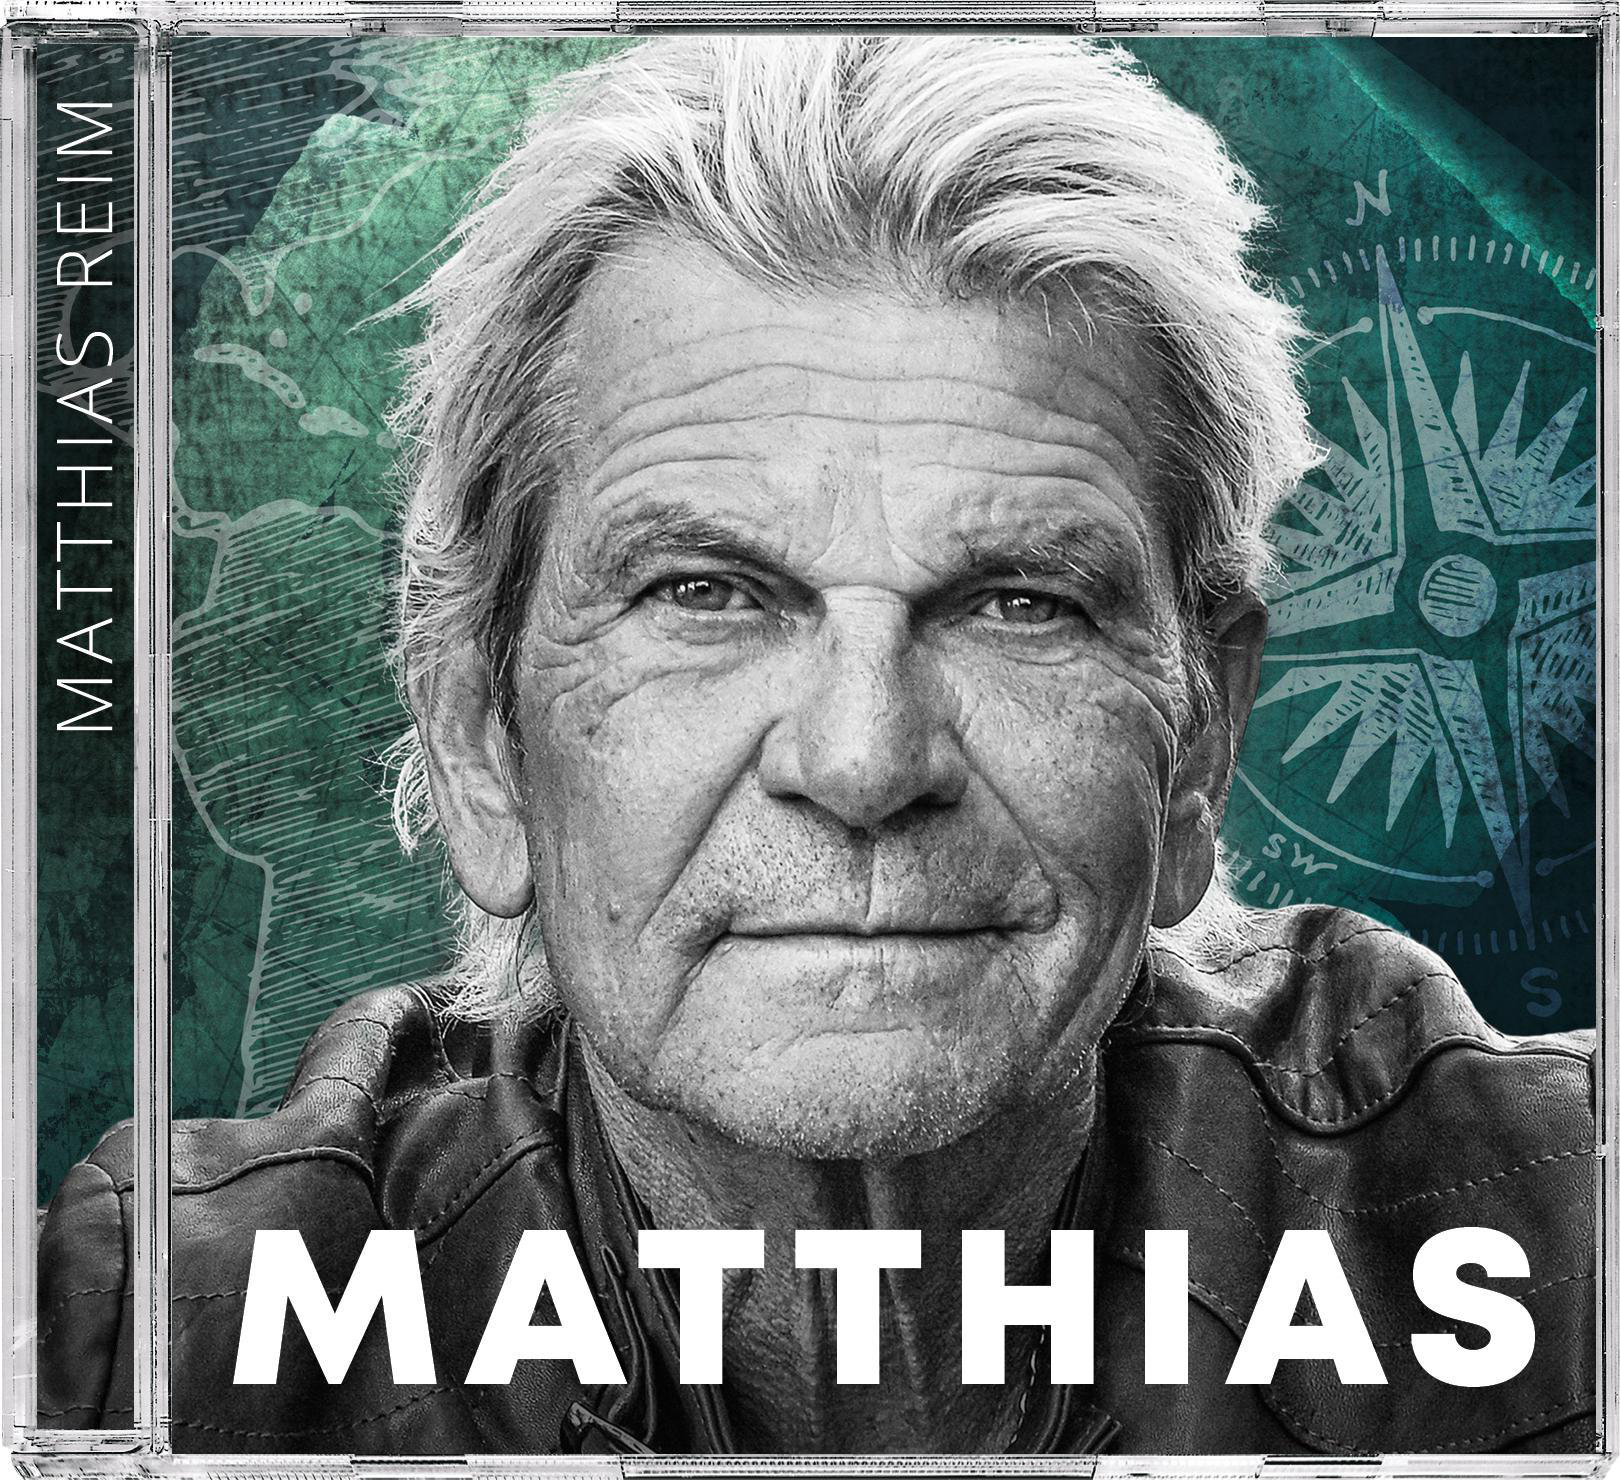 Reim (CD) - MATTHIAS Matthias -